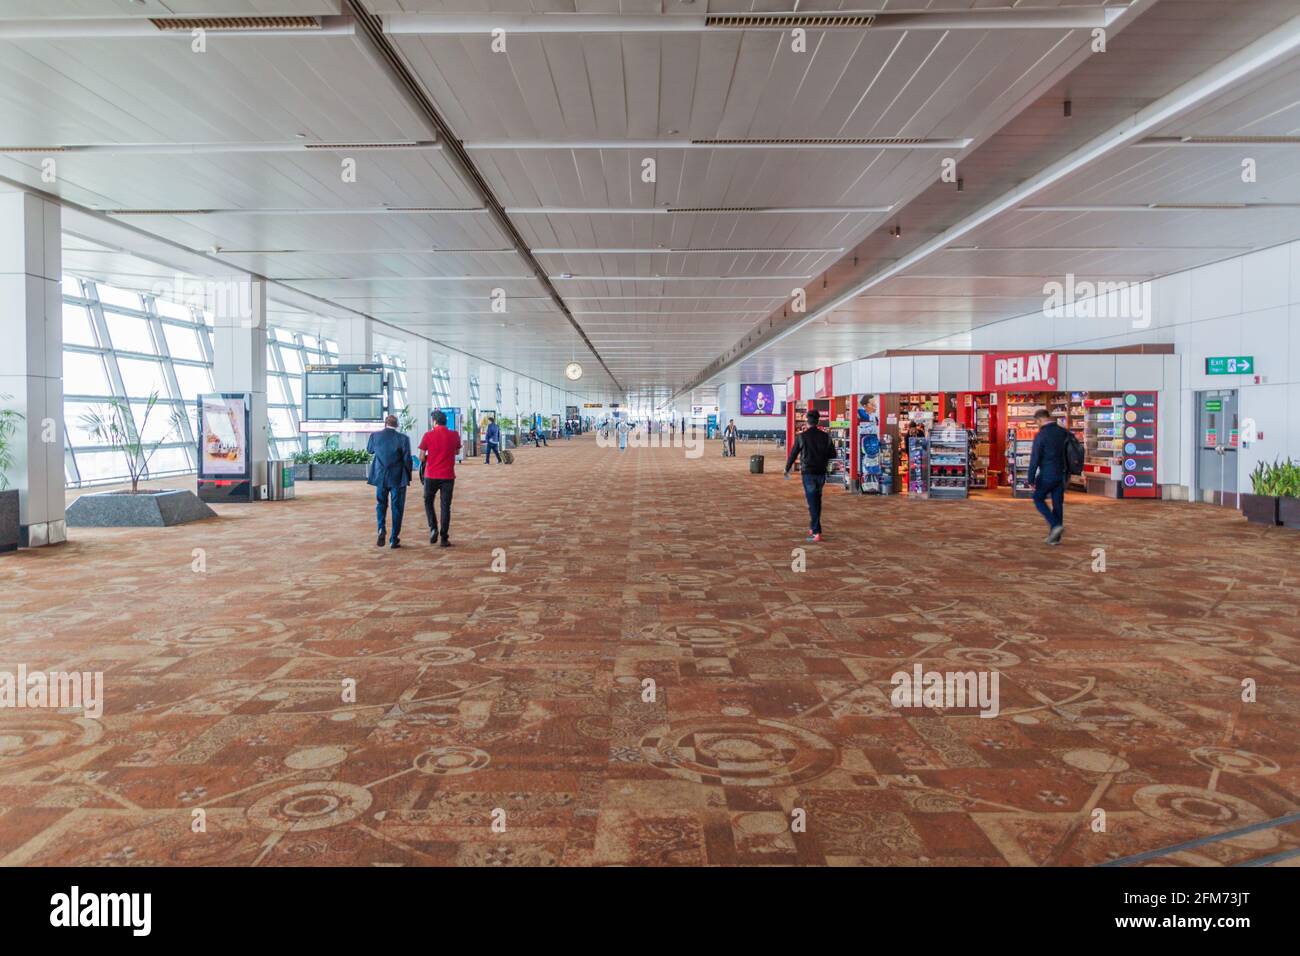 DELHI, INDE - 28 JANVIER 2017 : intérieur de l'aéroport international Indira Gandhi de Delhi, Inde Banque D'Images